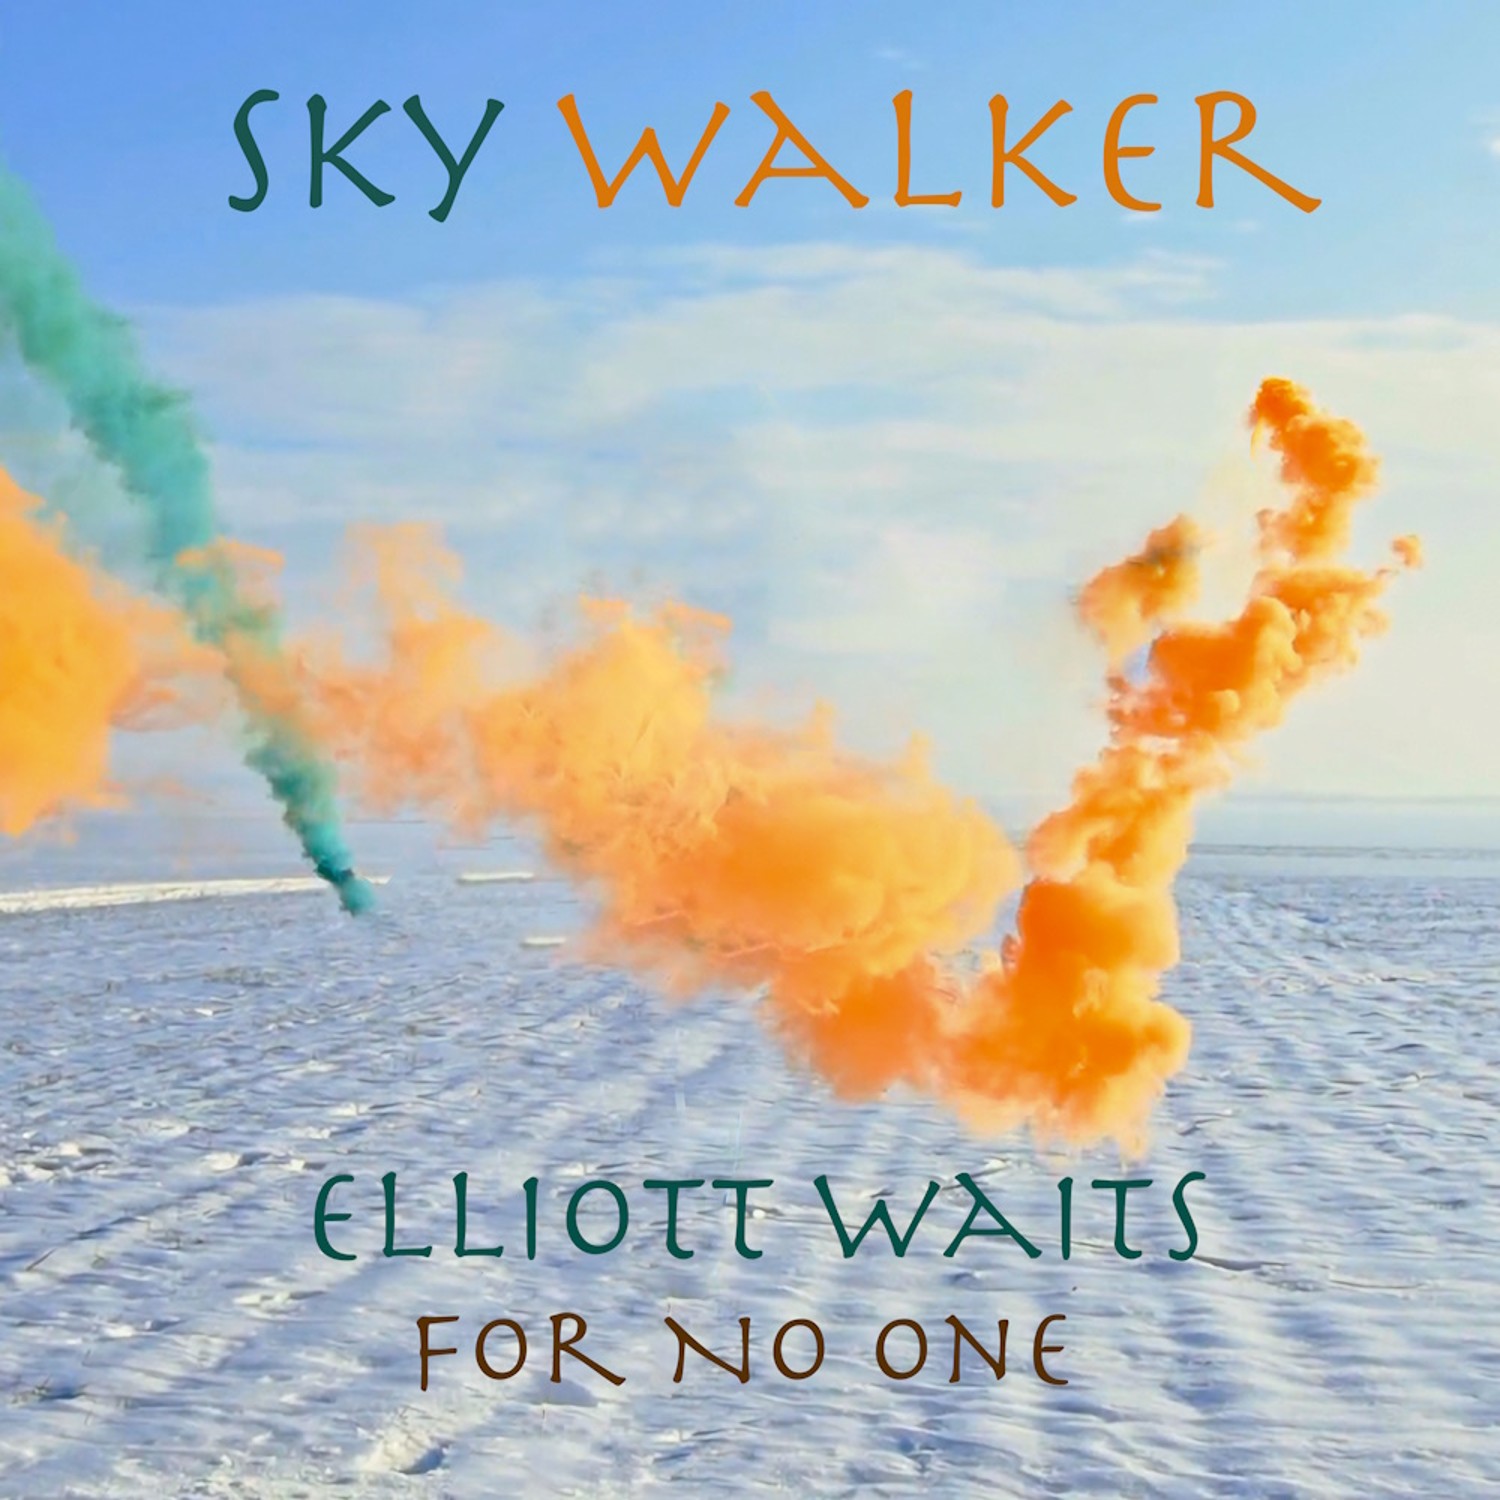 Elliott Waits For No One “Sky Walker” single artwork